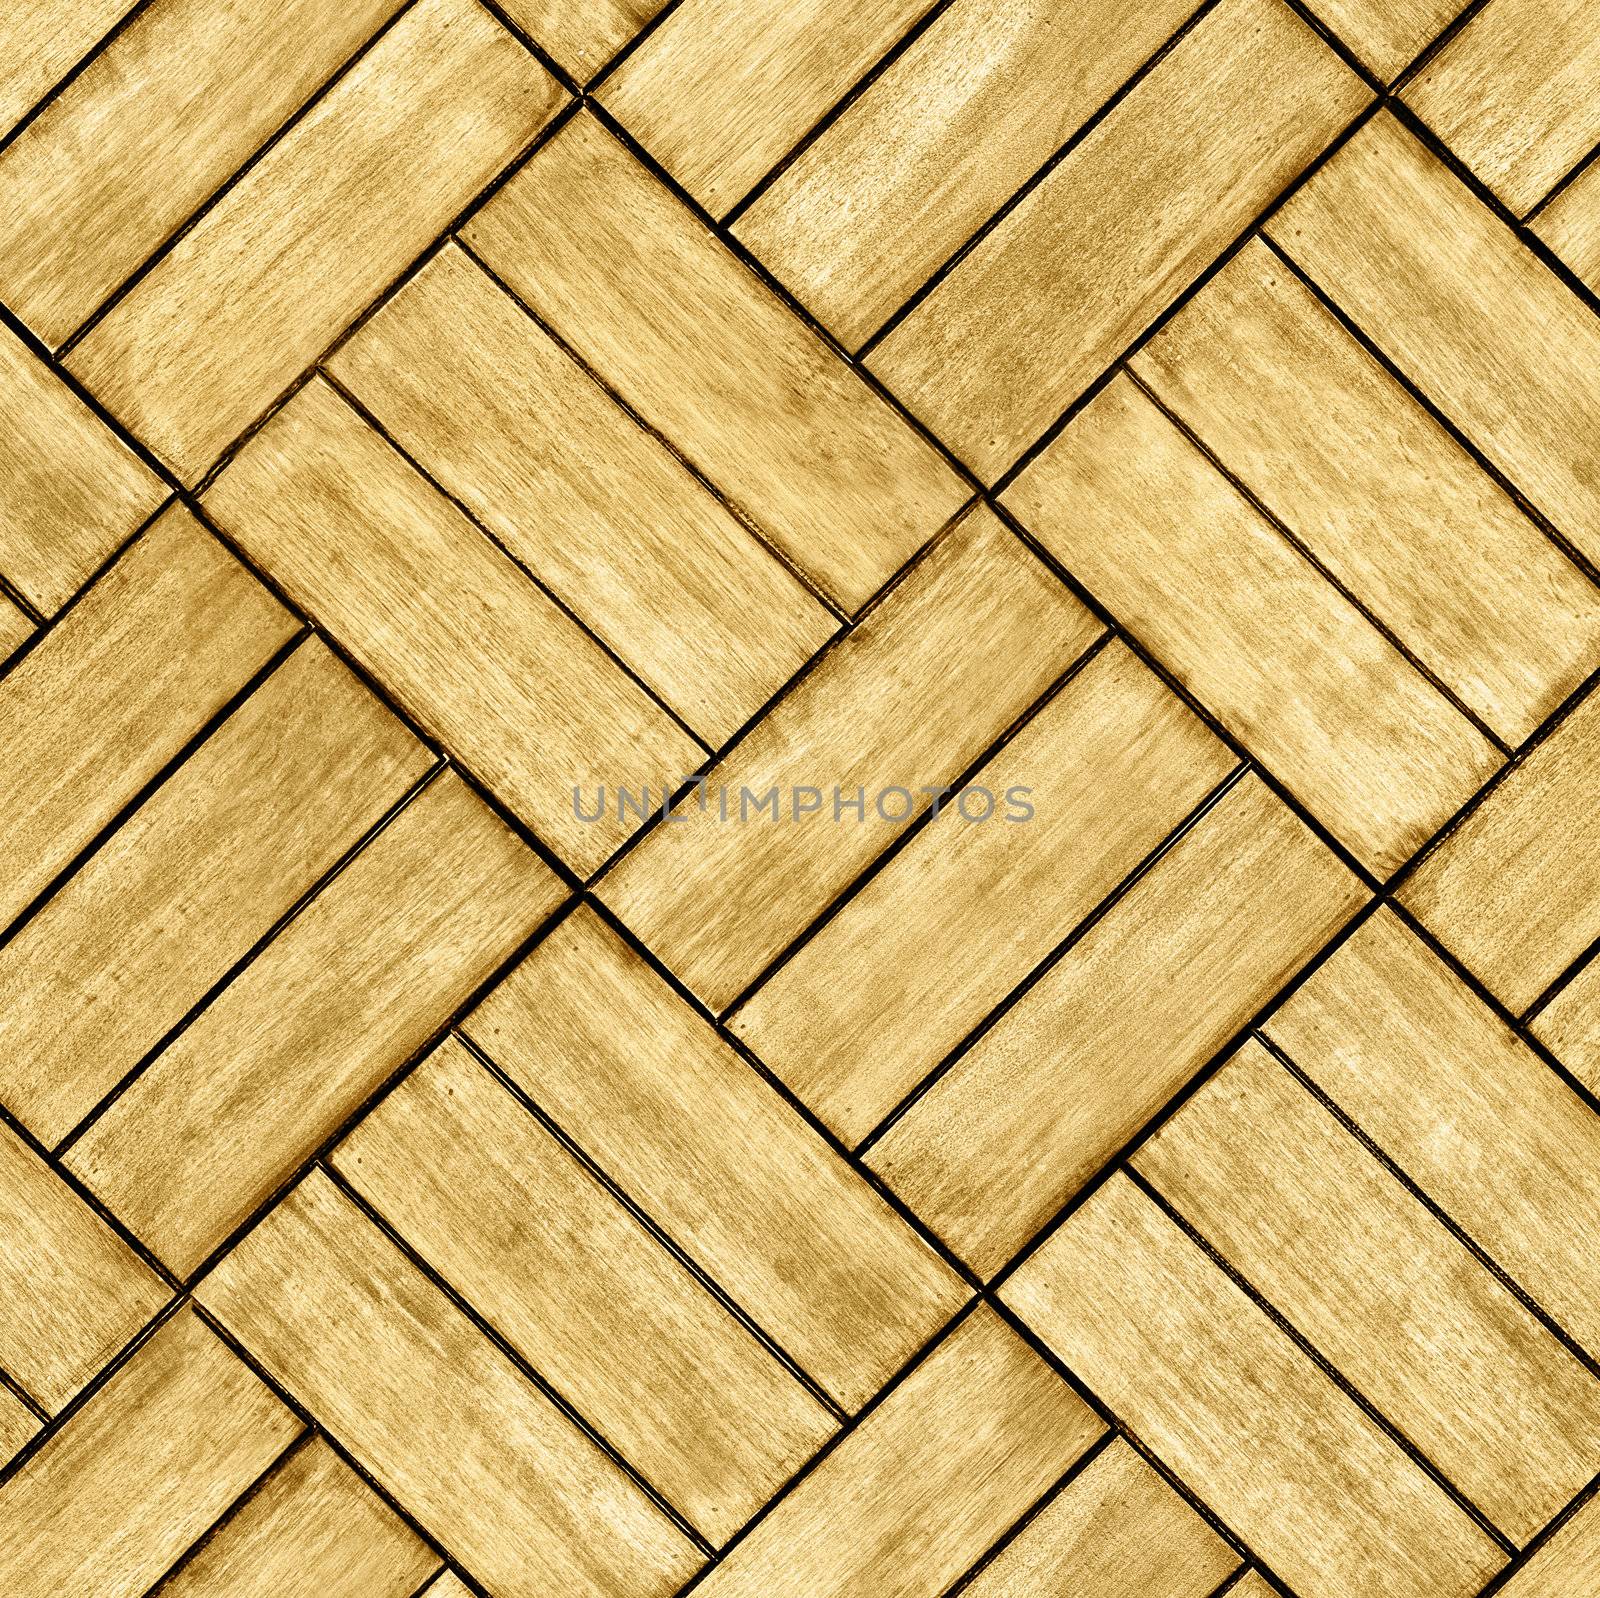 Parquet floor - seamless texture by pzaxe